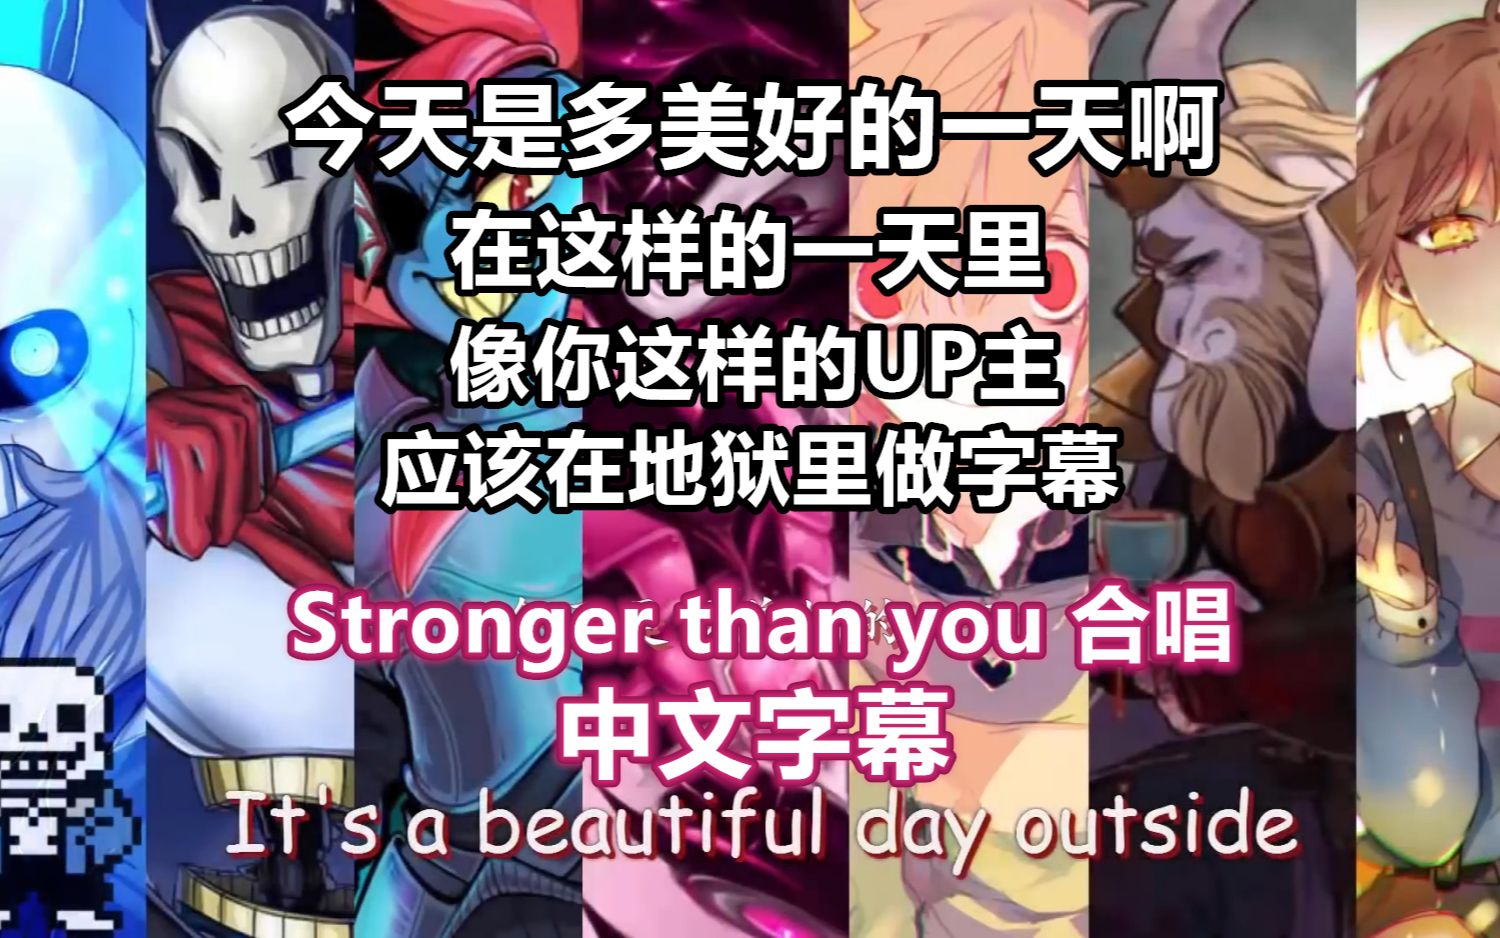 [图]【Undertale歌曲/中文字幕】Stronger than you 合唱